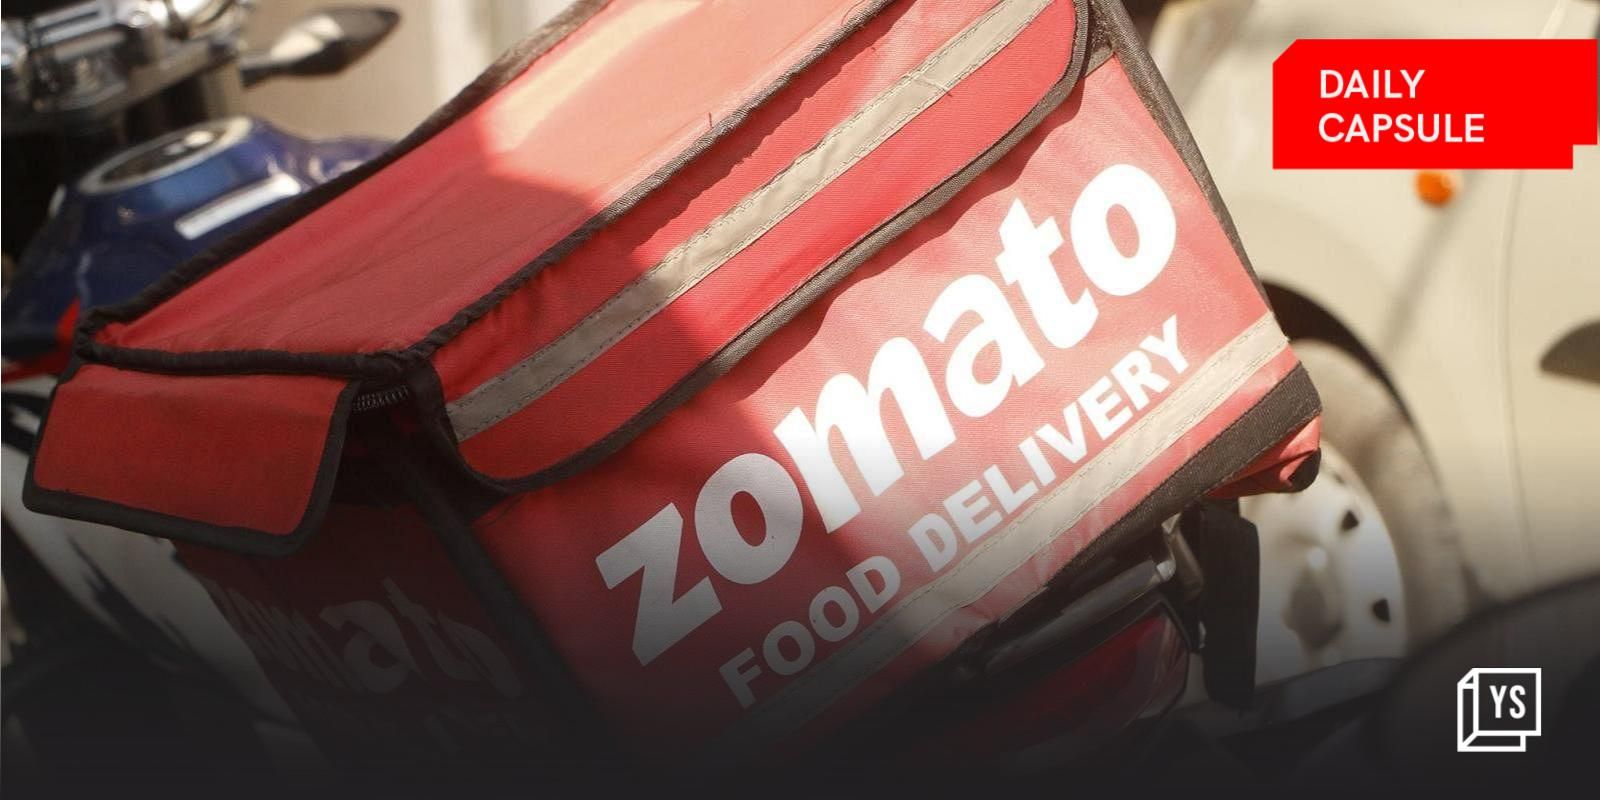 Zomato marks second profitable quarter; Shiprocket's revenue grows as losses widen